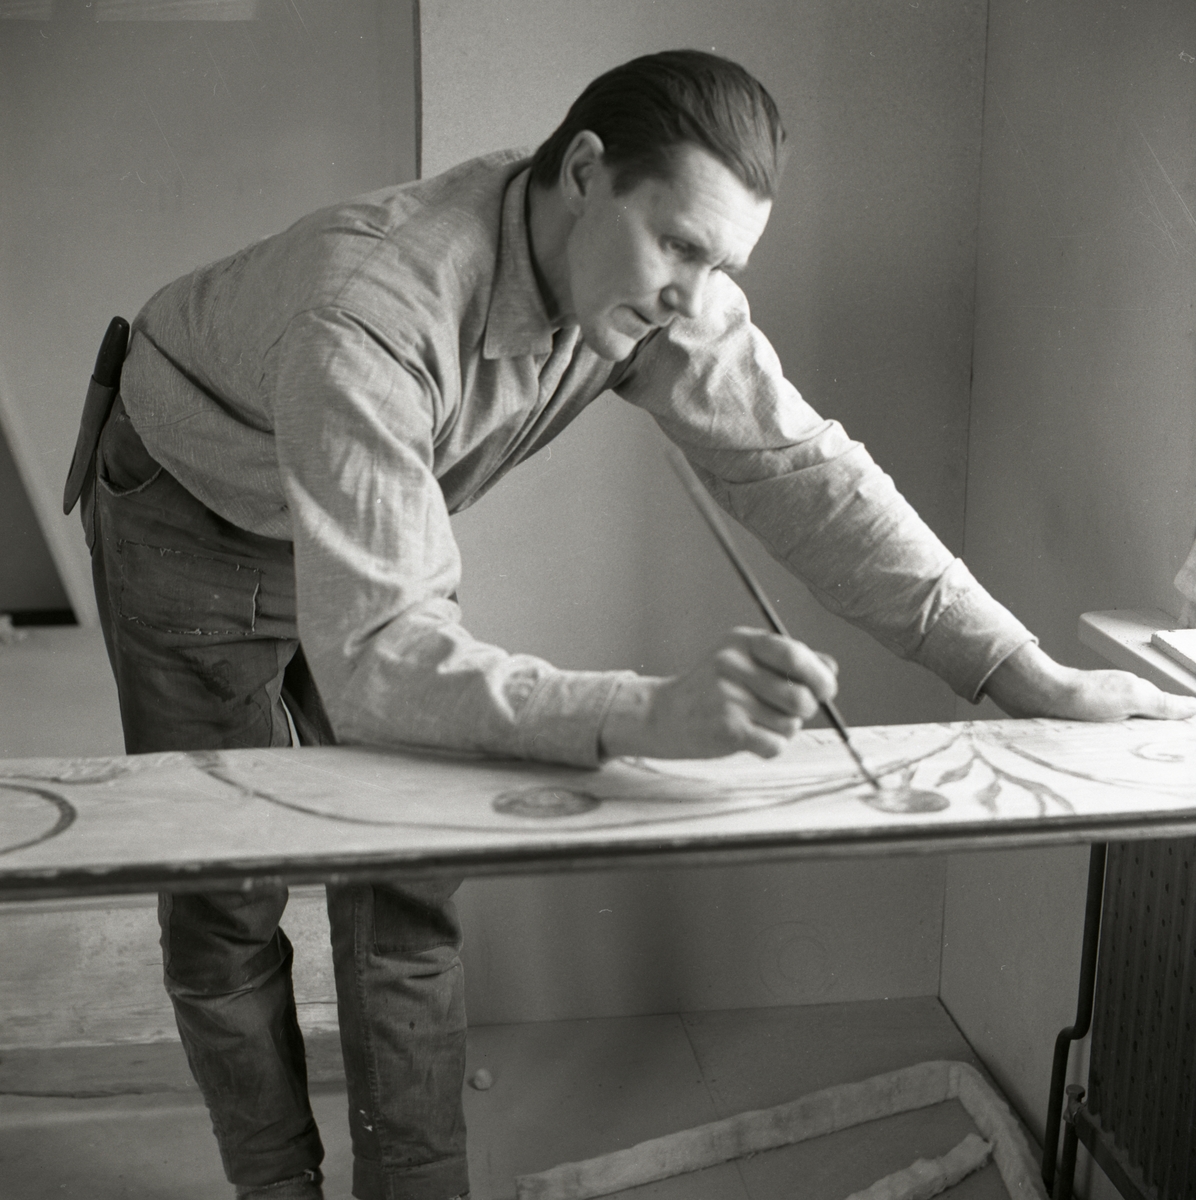 Hilding målar på en takbräda med en pensel, 1968-1969.